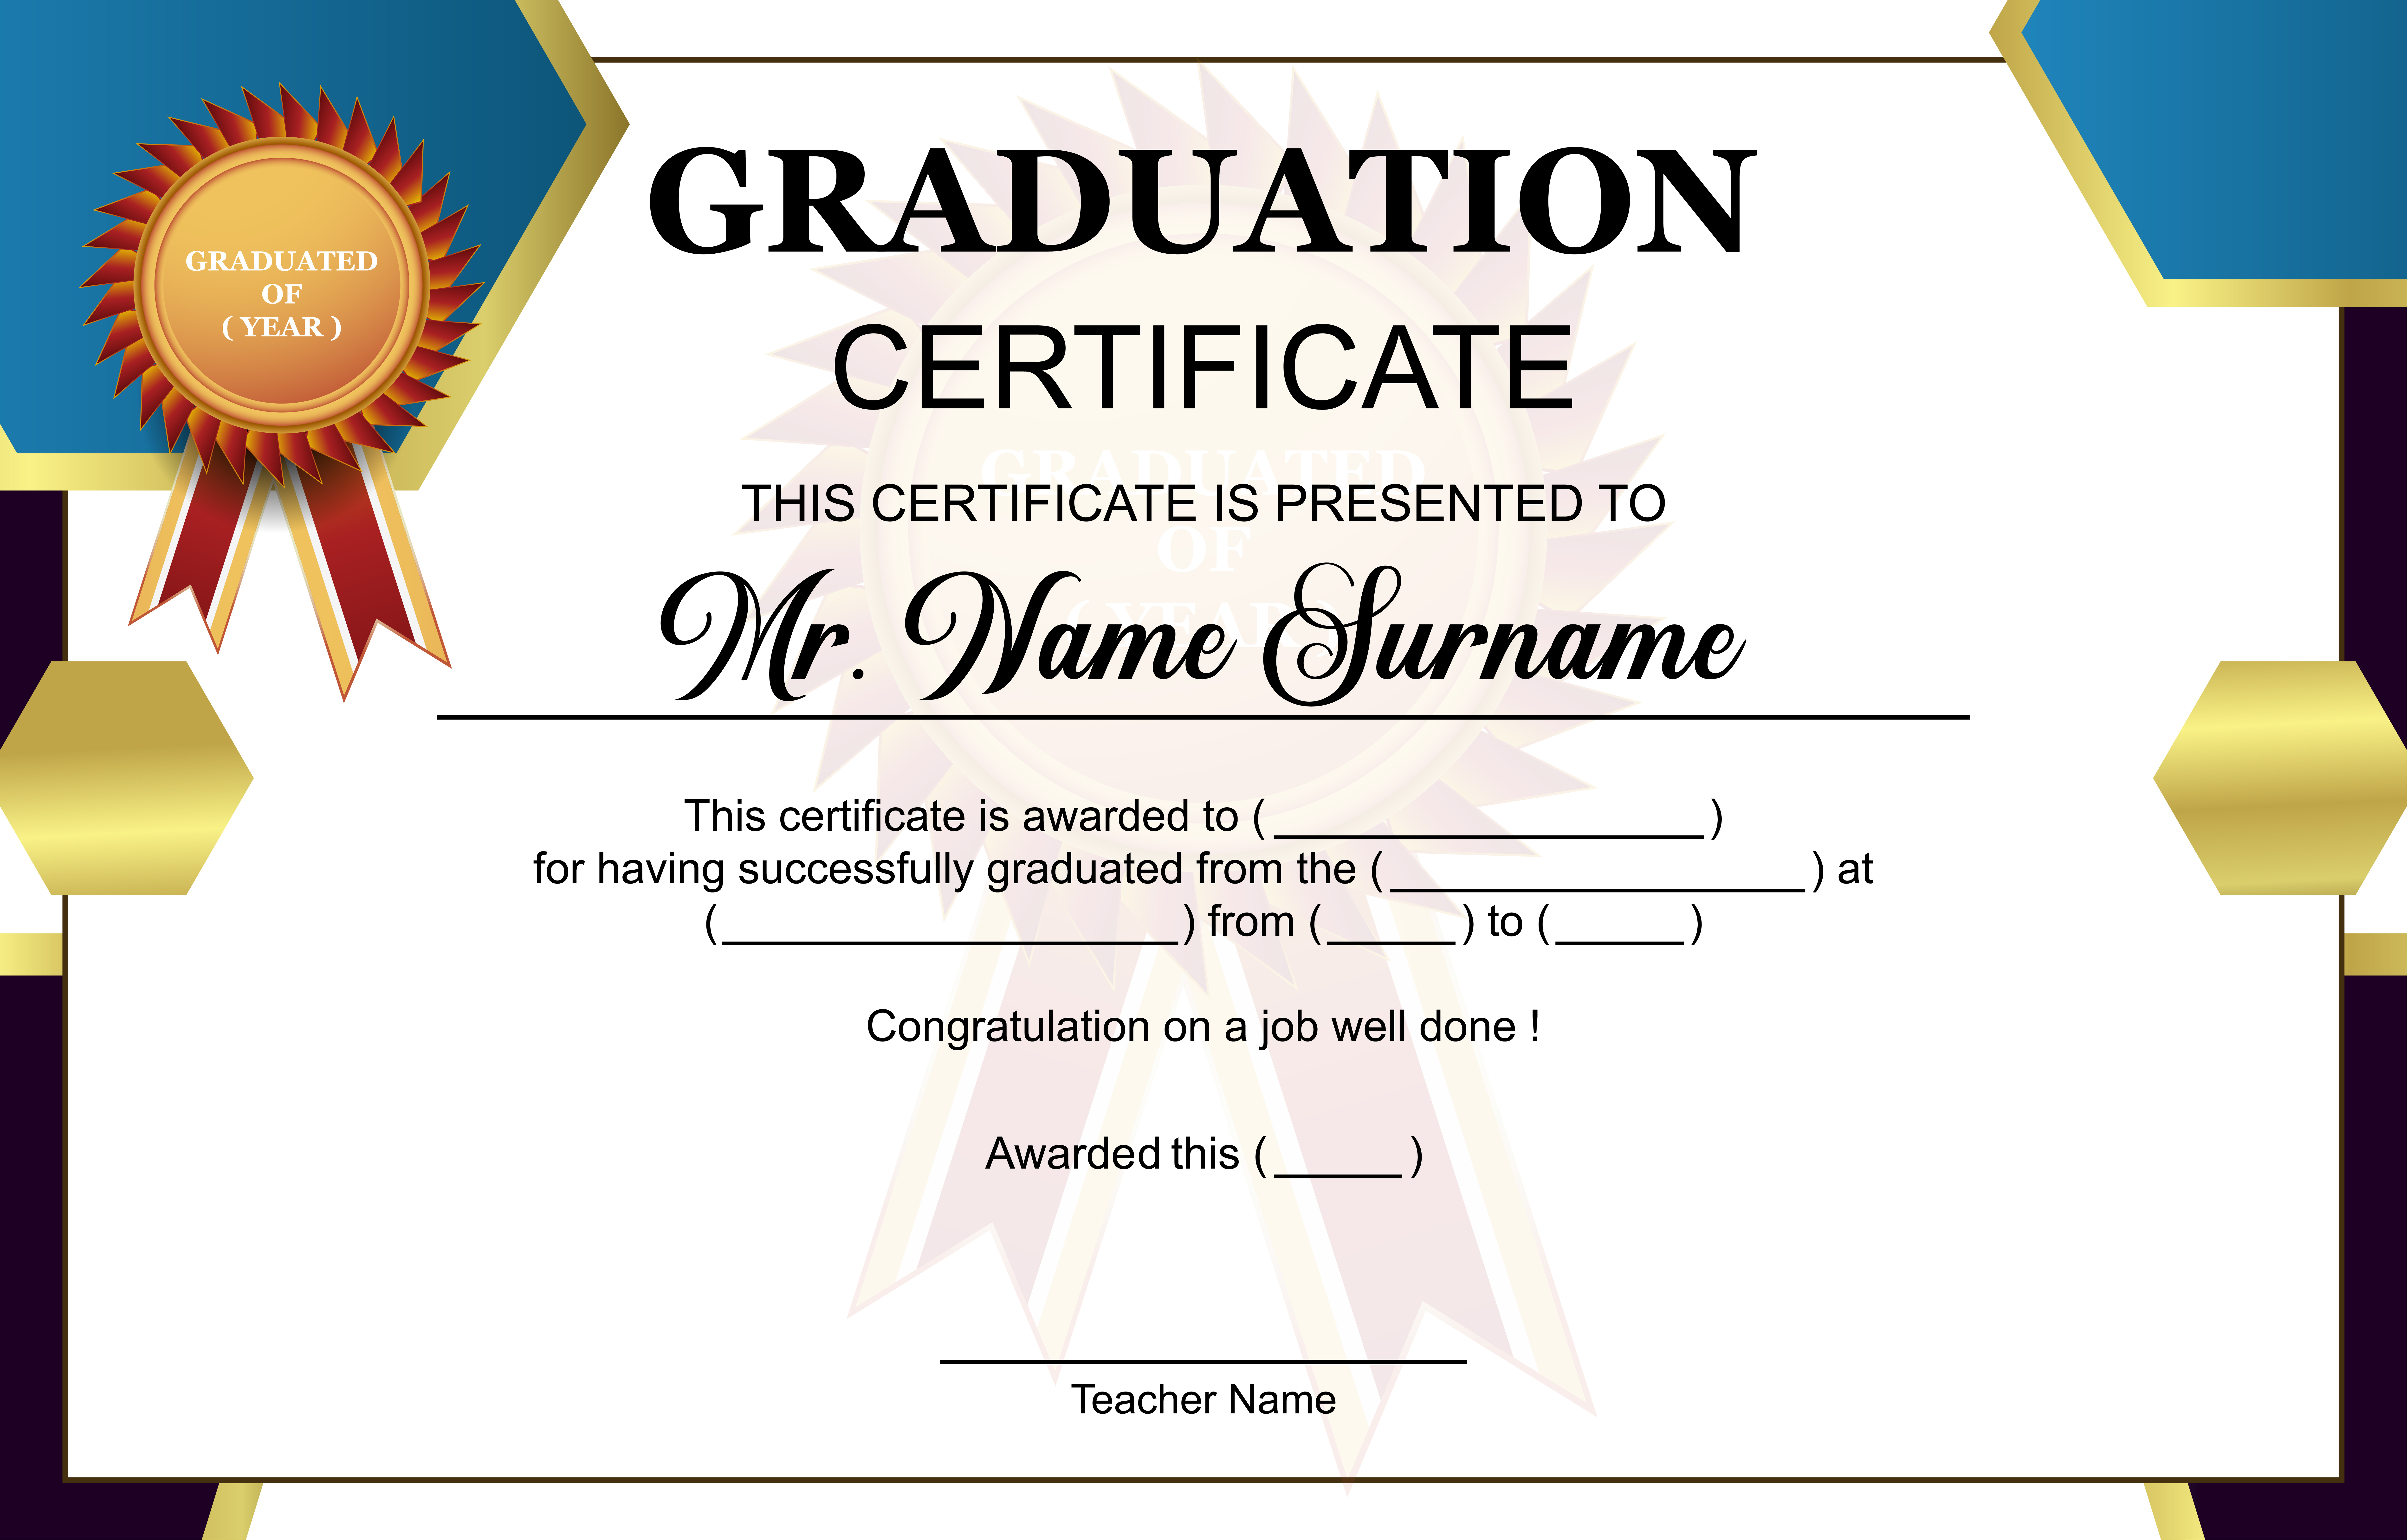 Graduation Certificate Template 10 Vector Art At Vecteezy With Free Printable Graduation Certificate Templates